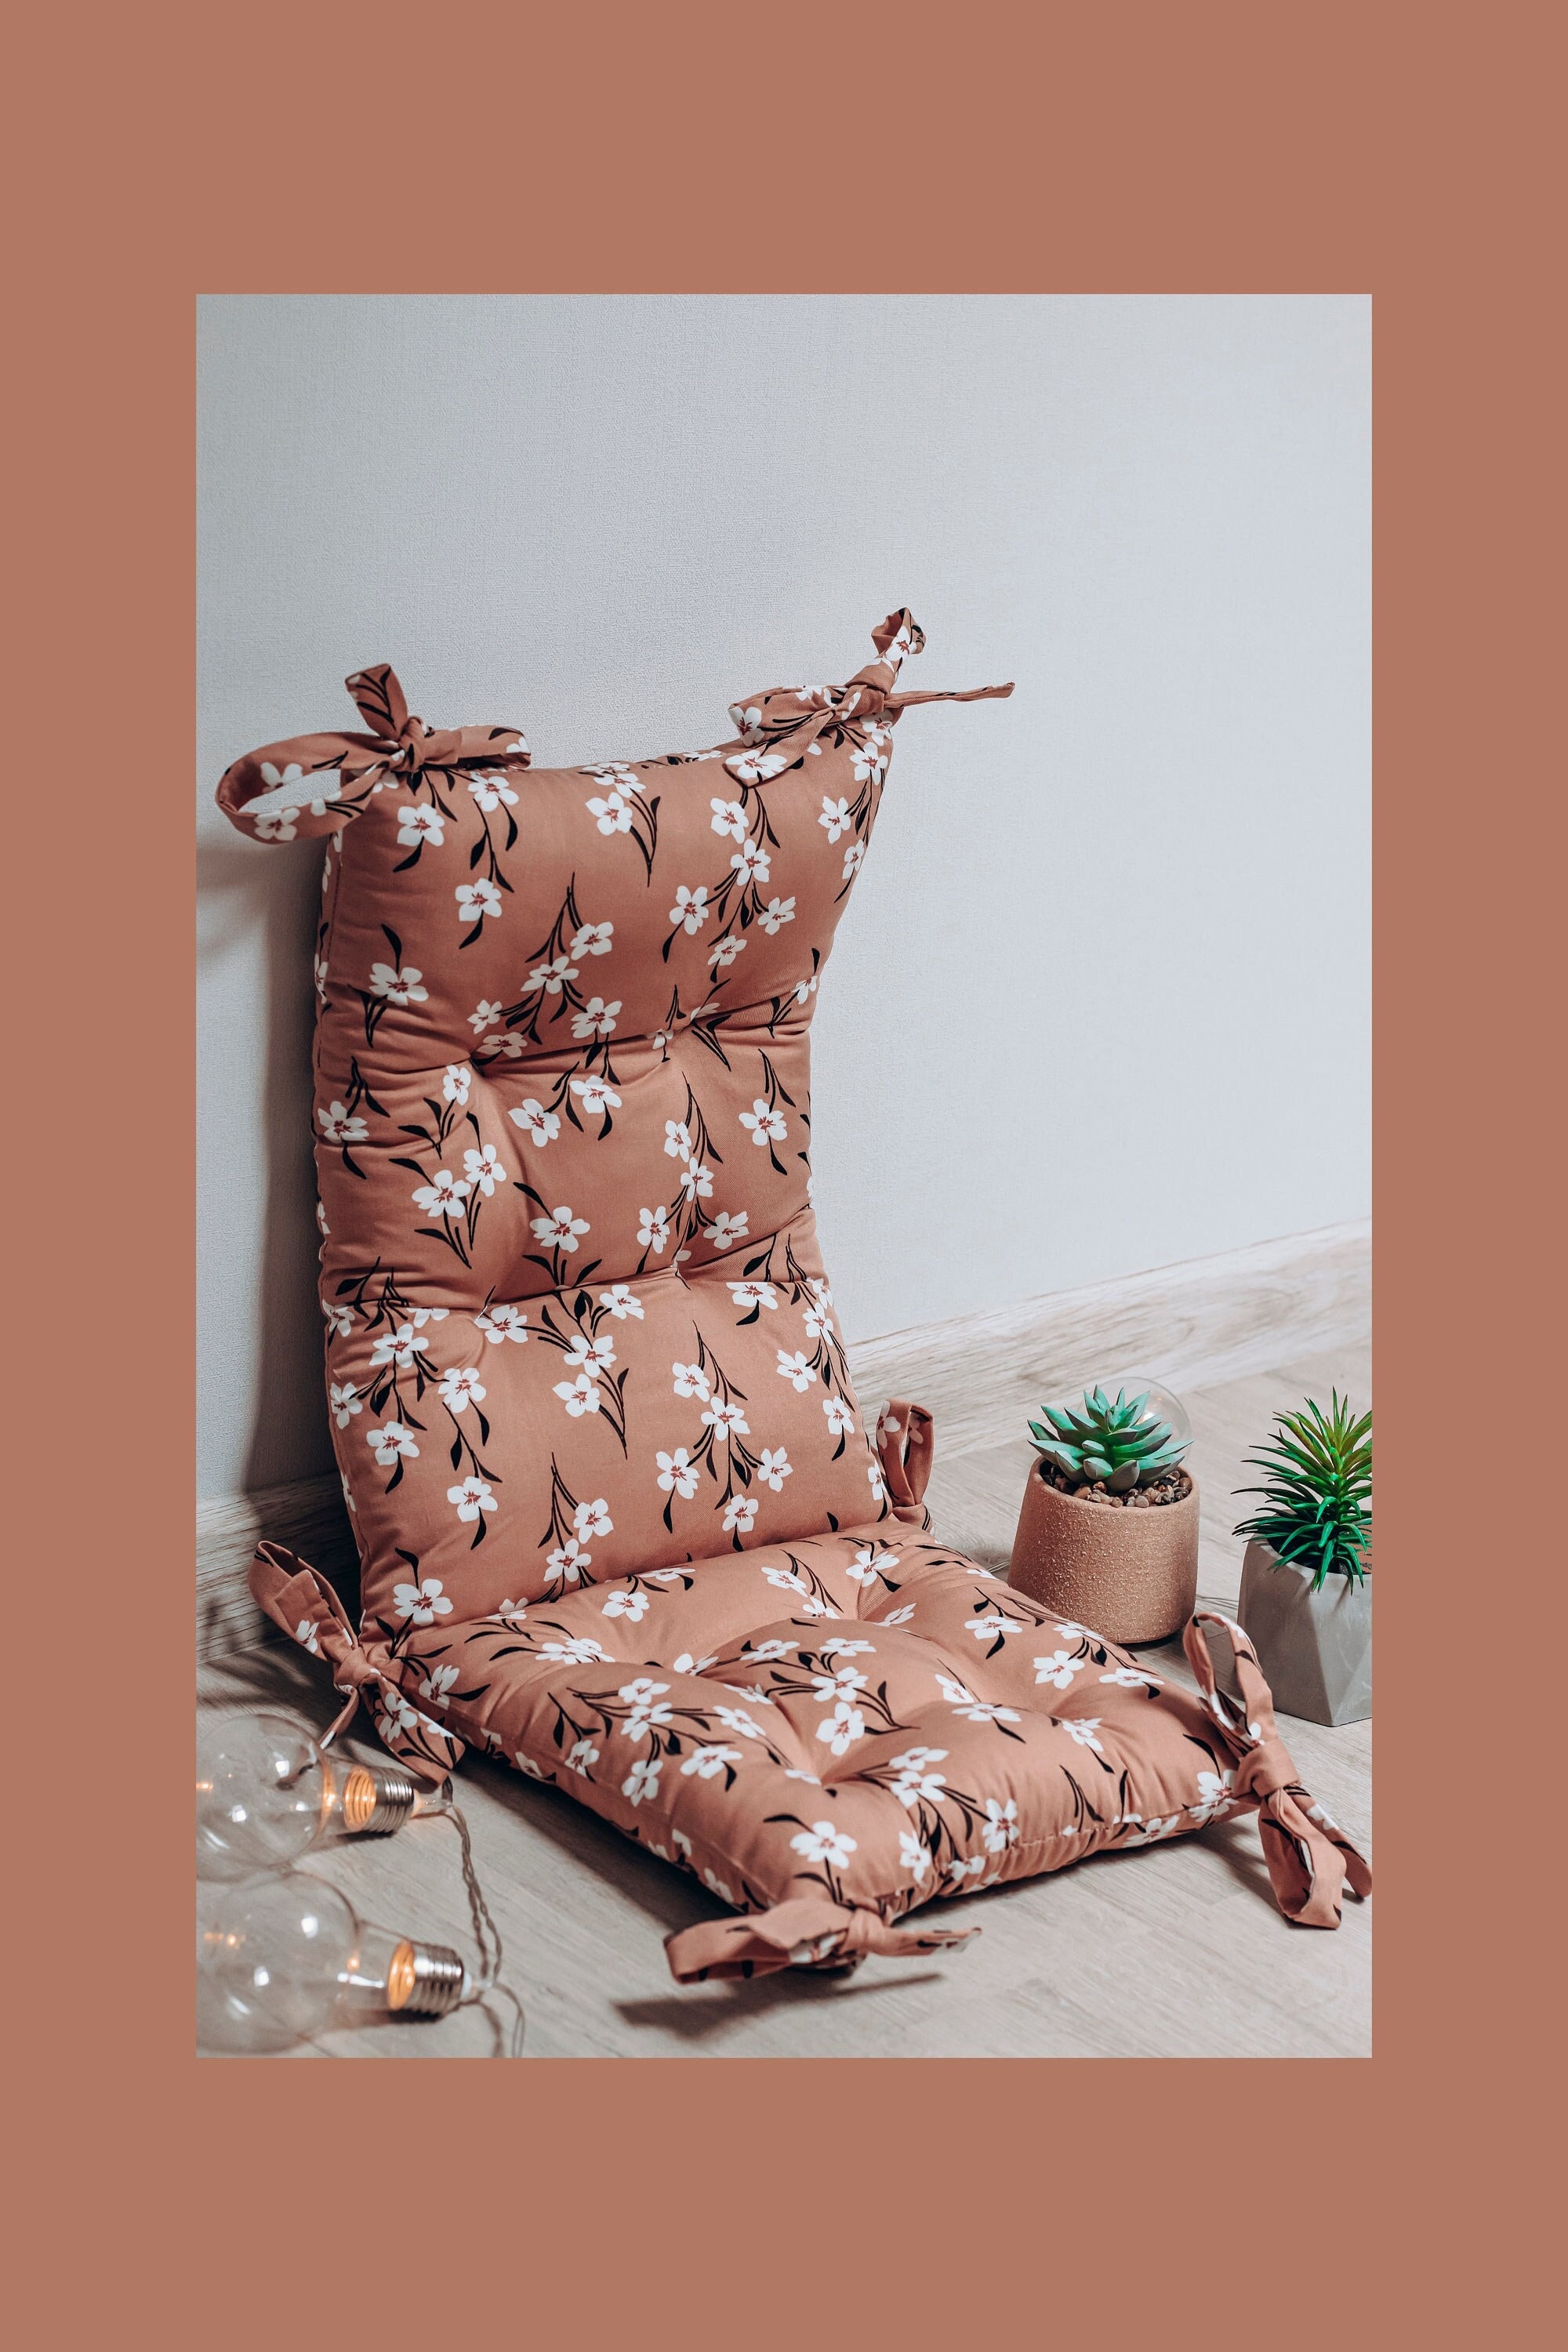 Kid Cushion] Heavenly Child's Rocking Chair Cushion - aBaby